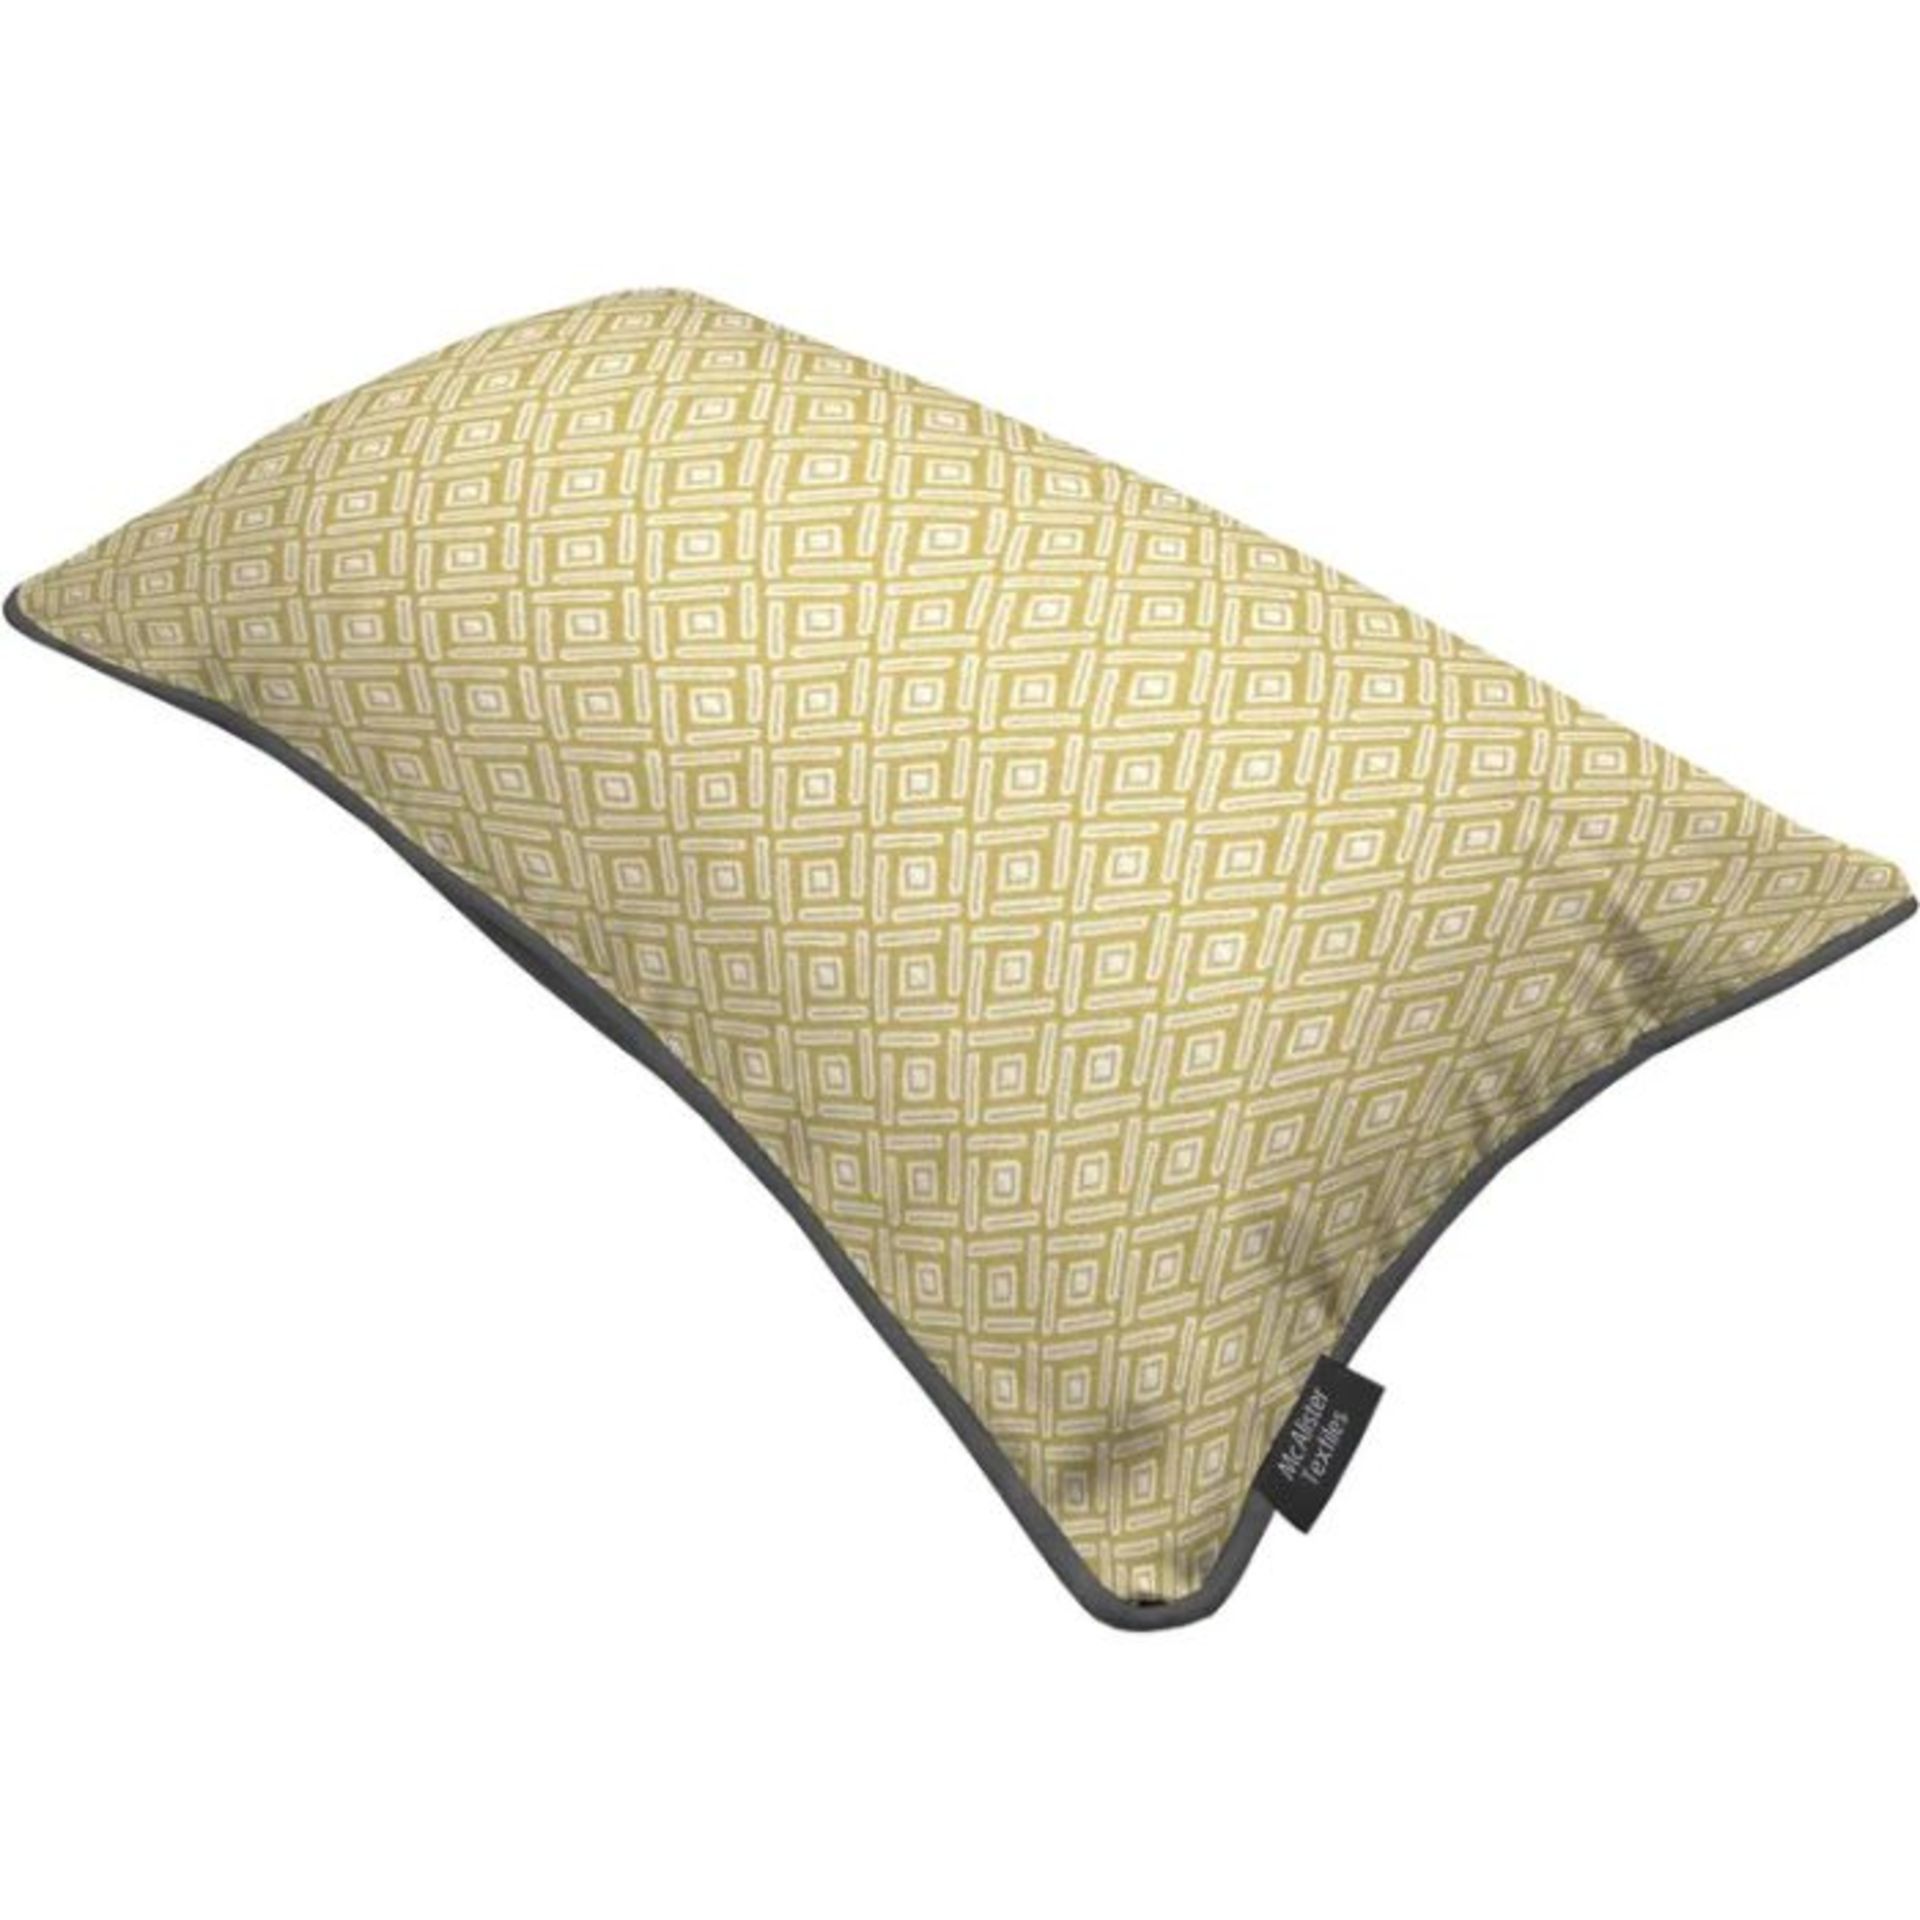 Ophelia & Co., Hudepohl Geometric Rectangular Cushion Cover (OCHRE) (40 x 60cm) - RRP £27.99 (